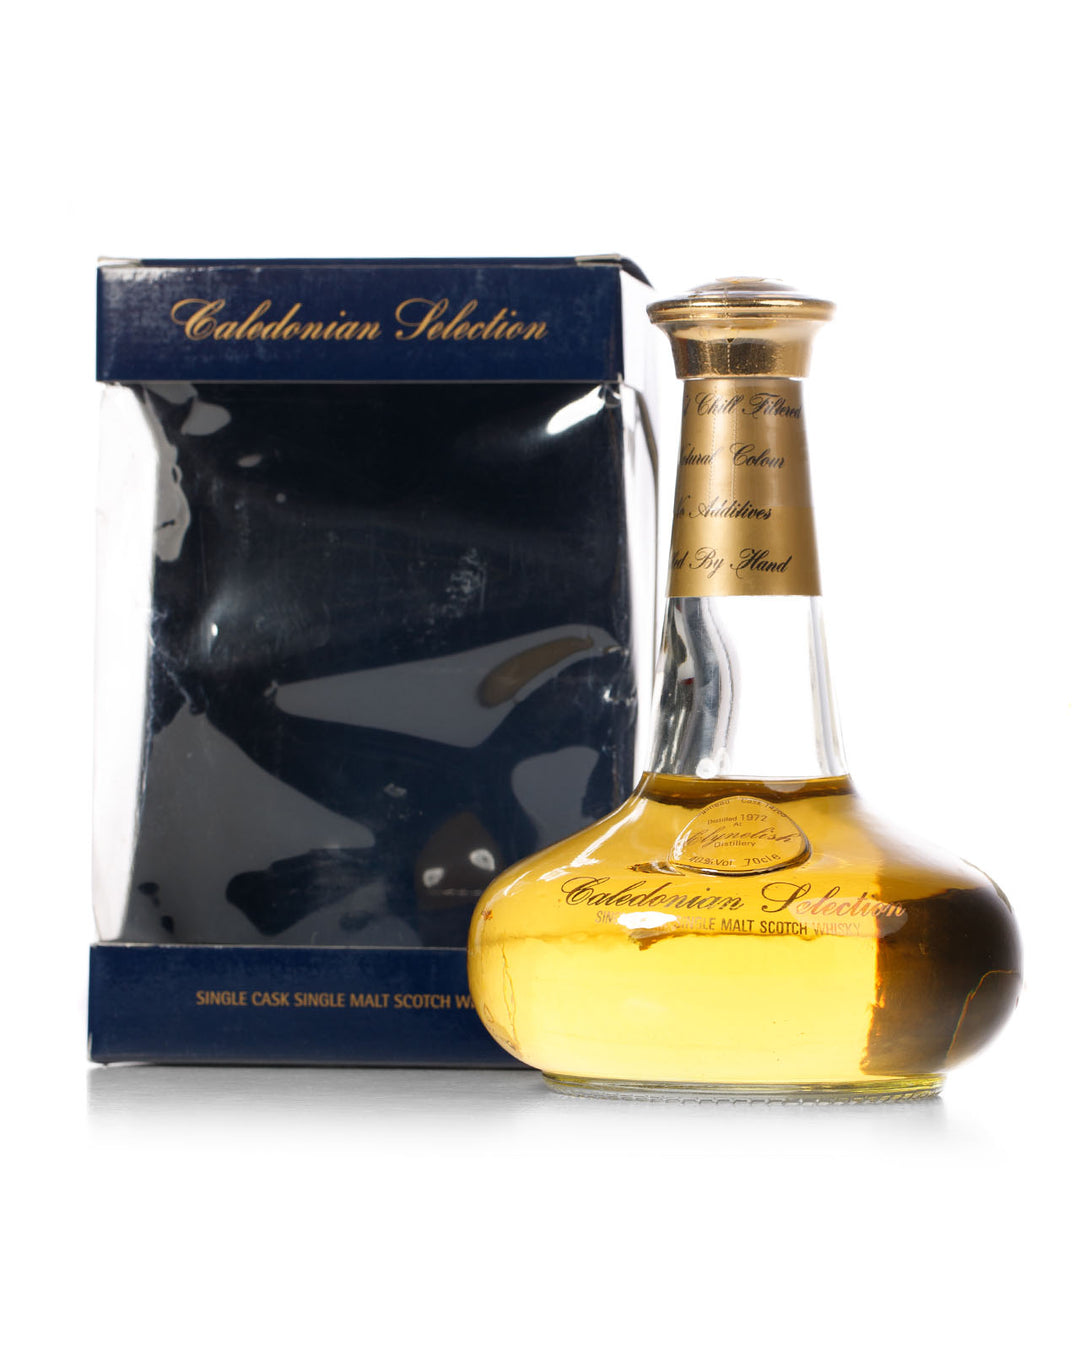 Clynelish 1972 Caledonian Selection Bottled 2001 40% ABV With Original Box